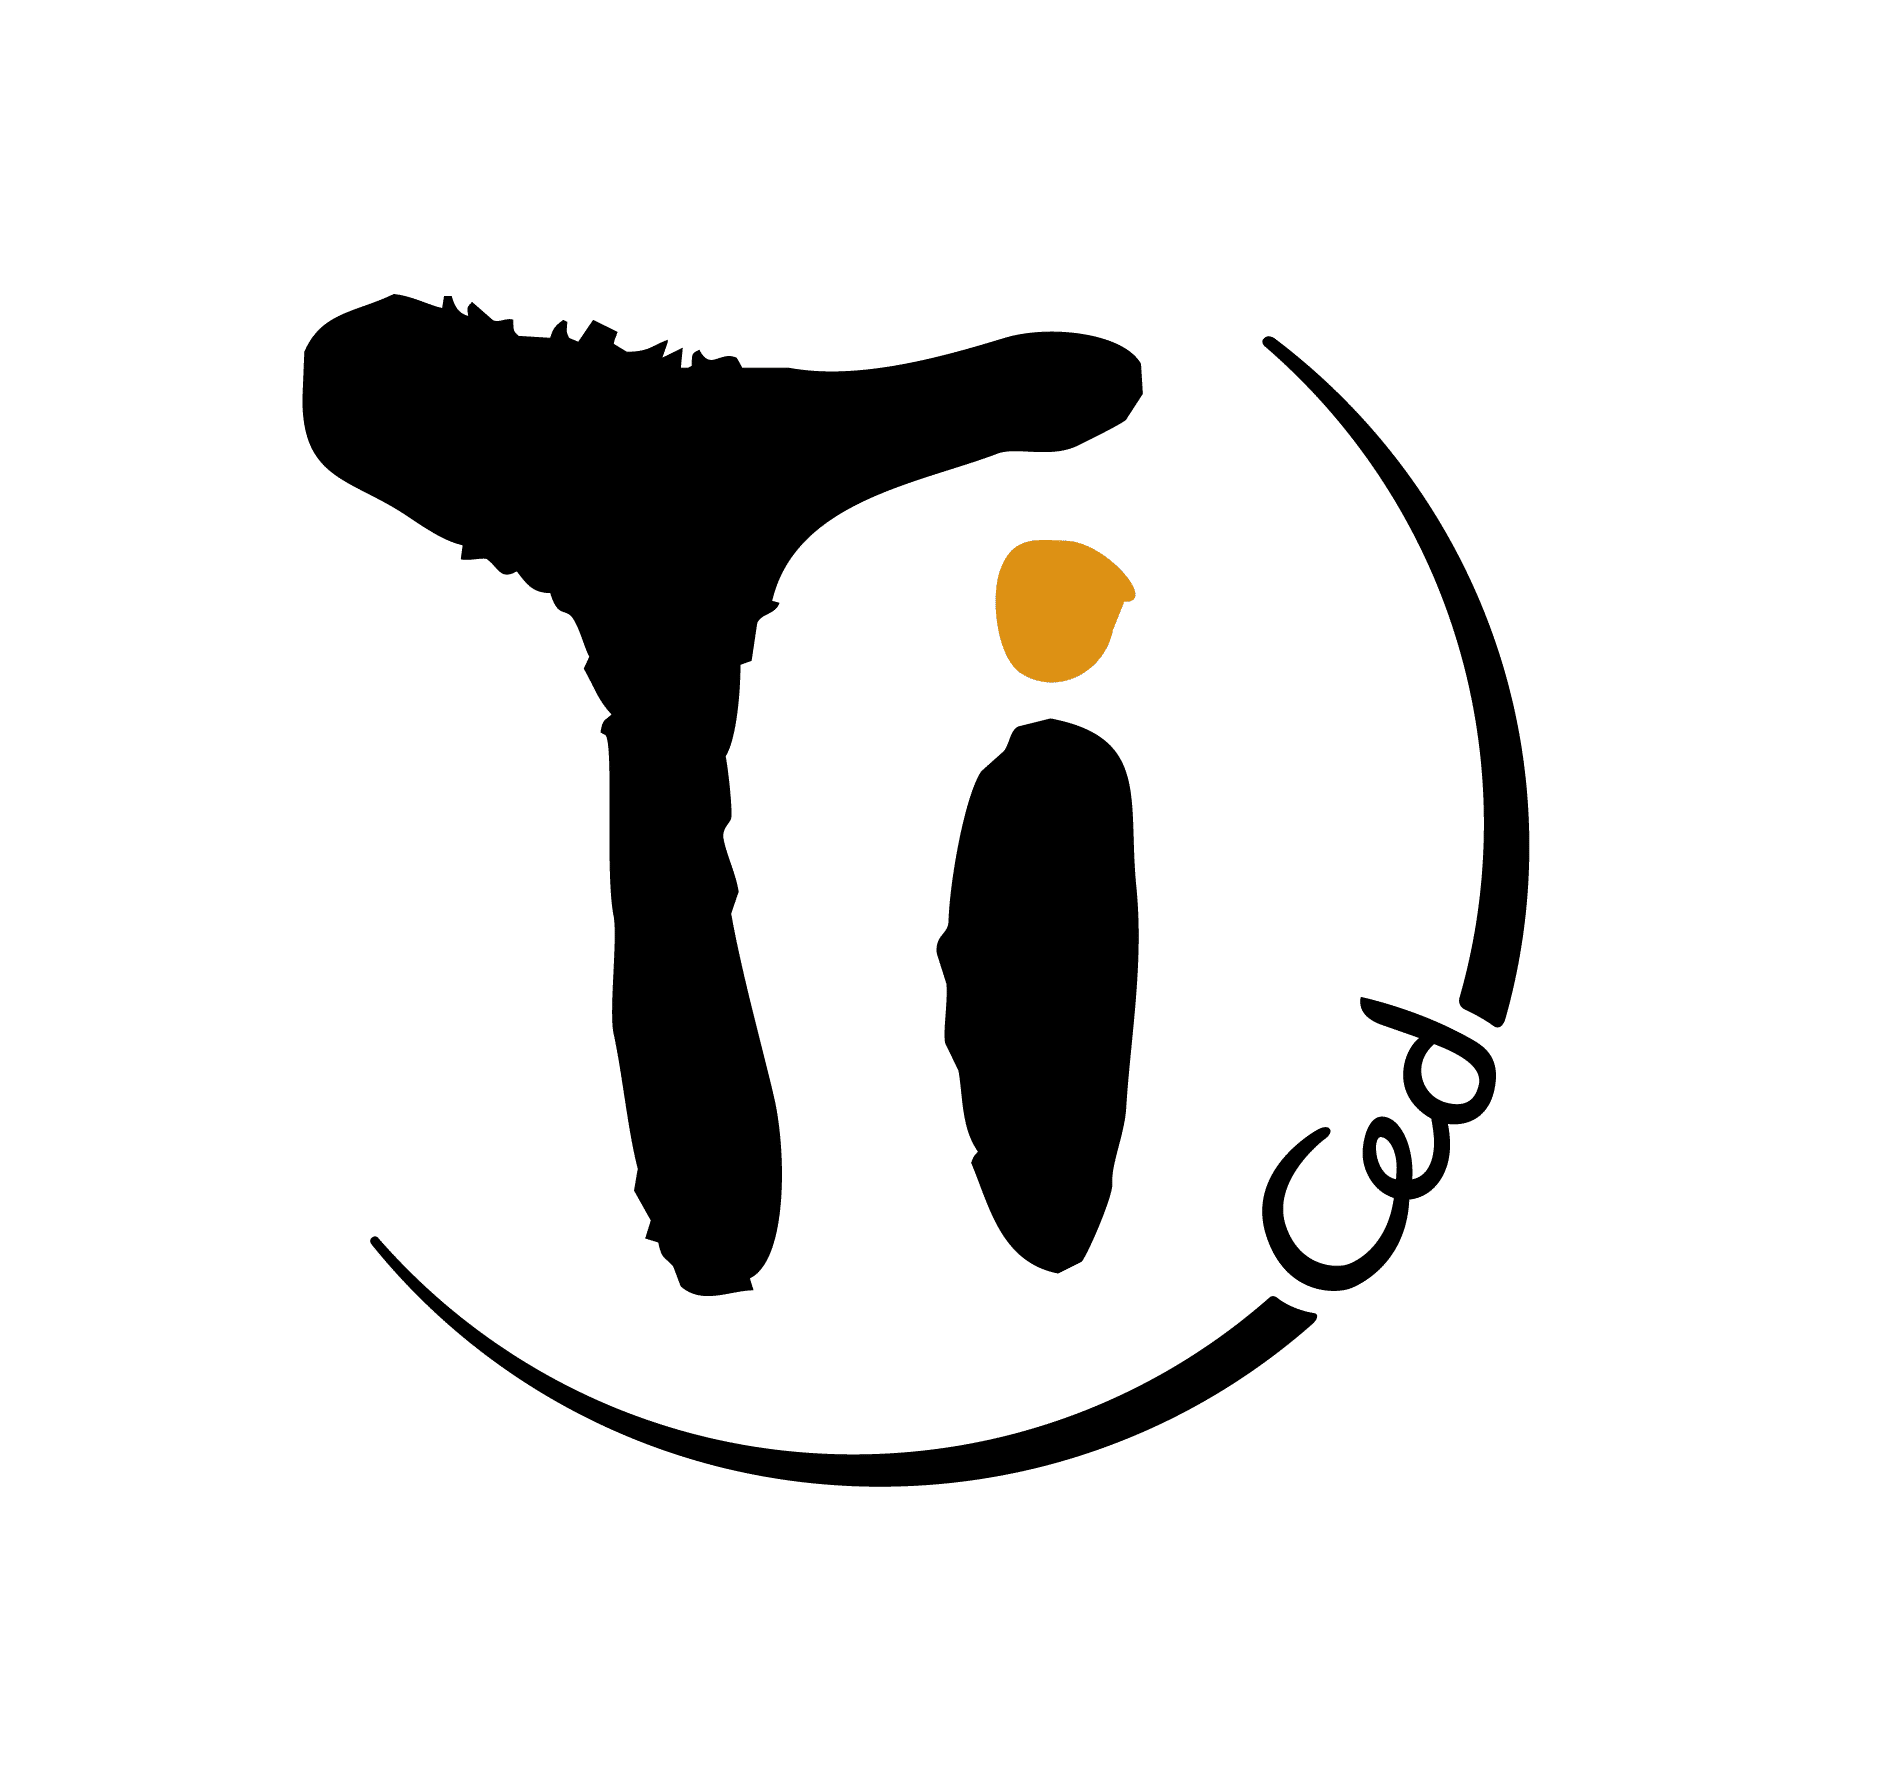 Ti Ced en noir (Logo sans fond)